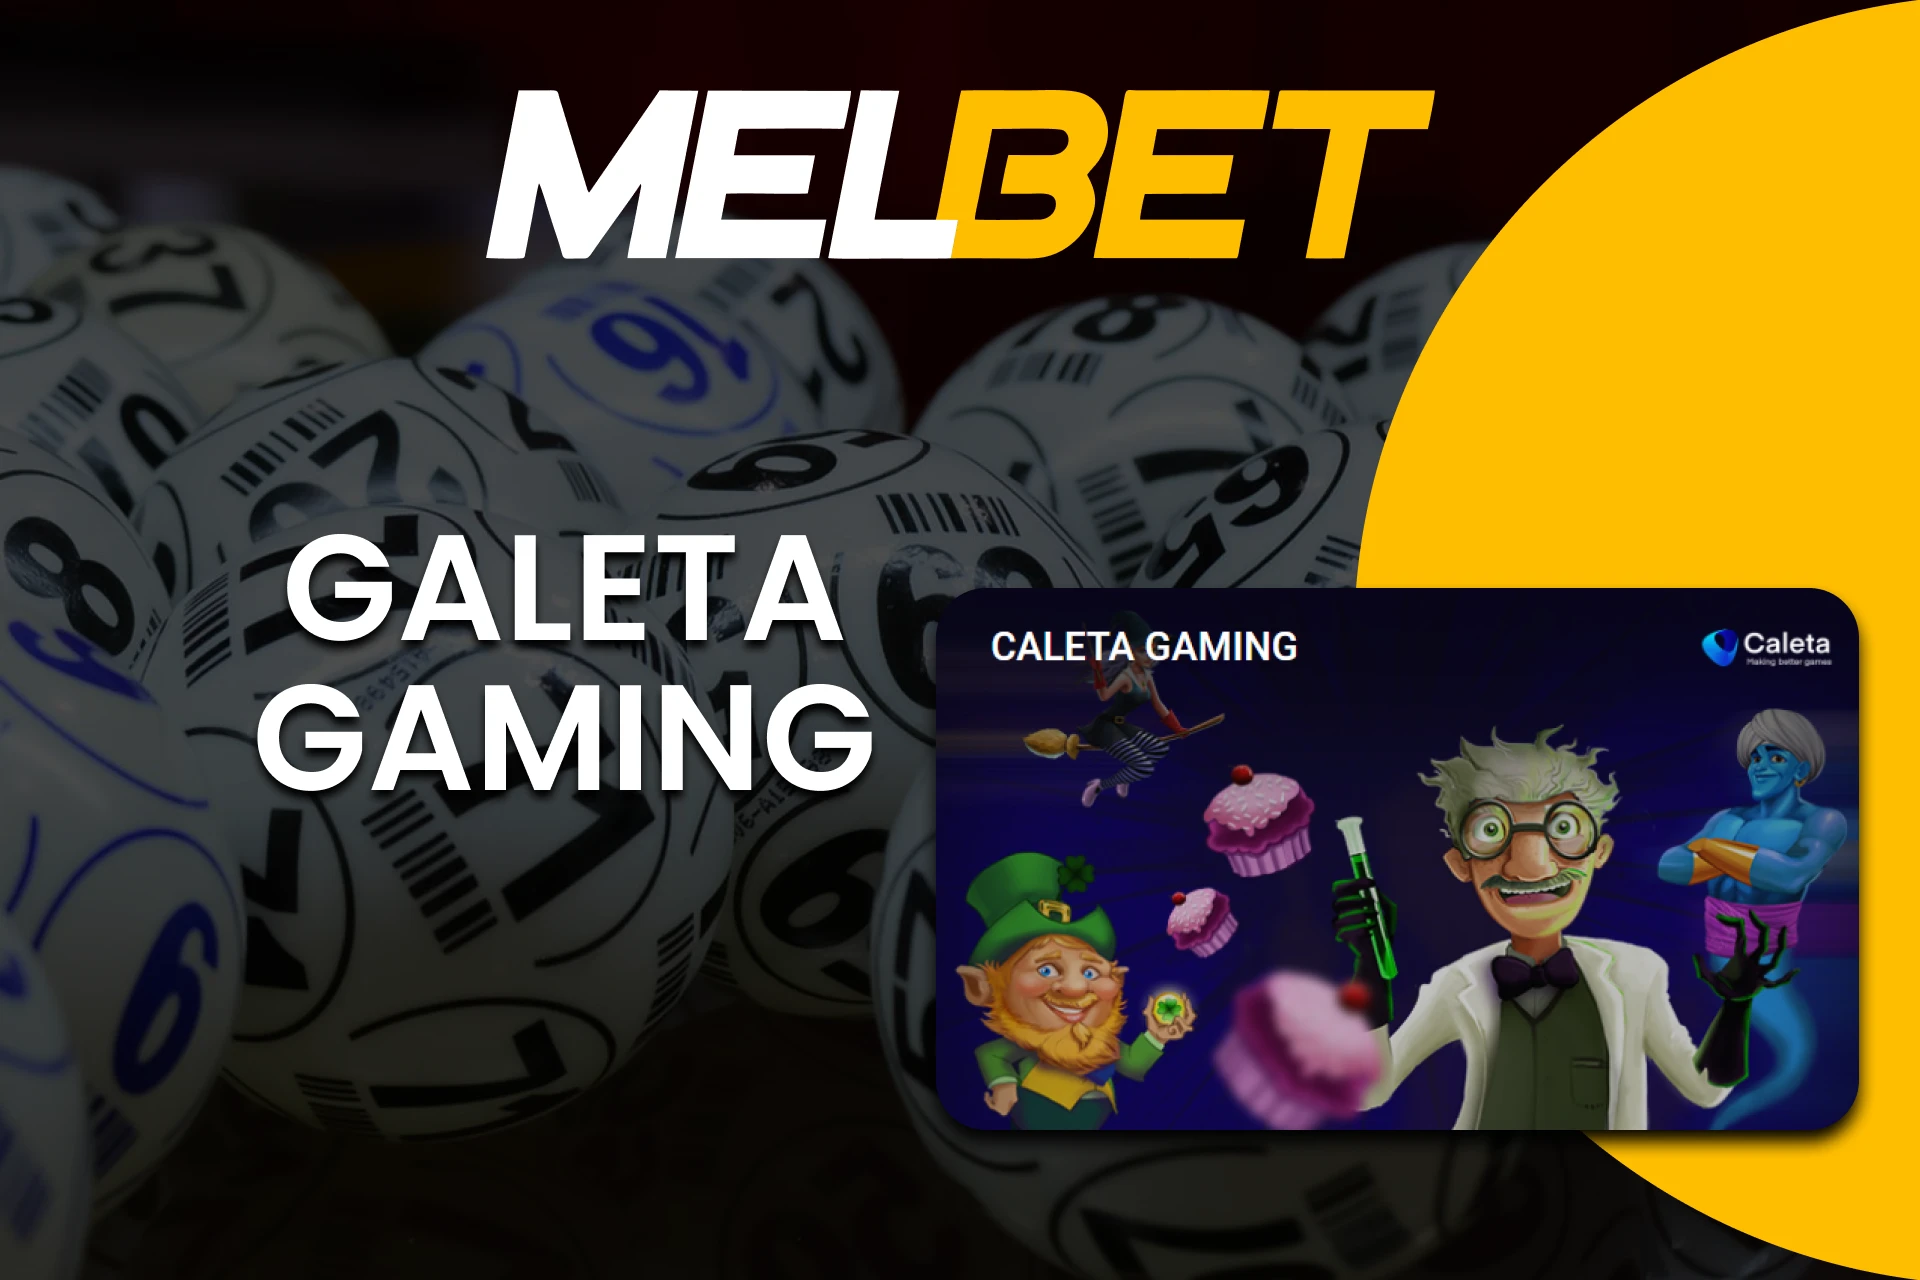 To play Bingo, choose Galeta Gaming from Melbet.